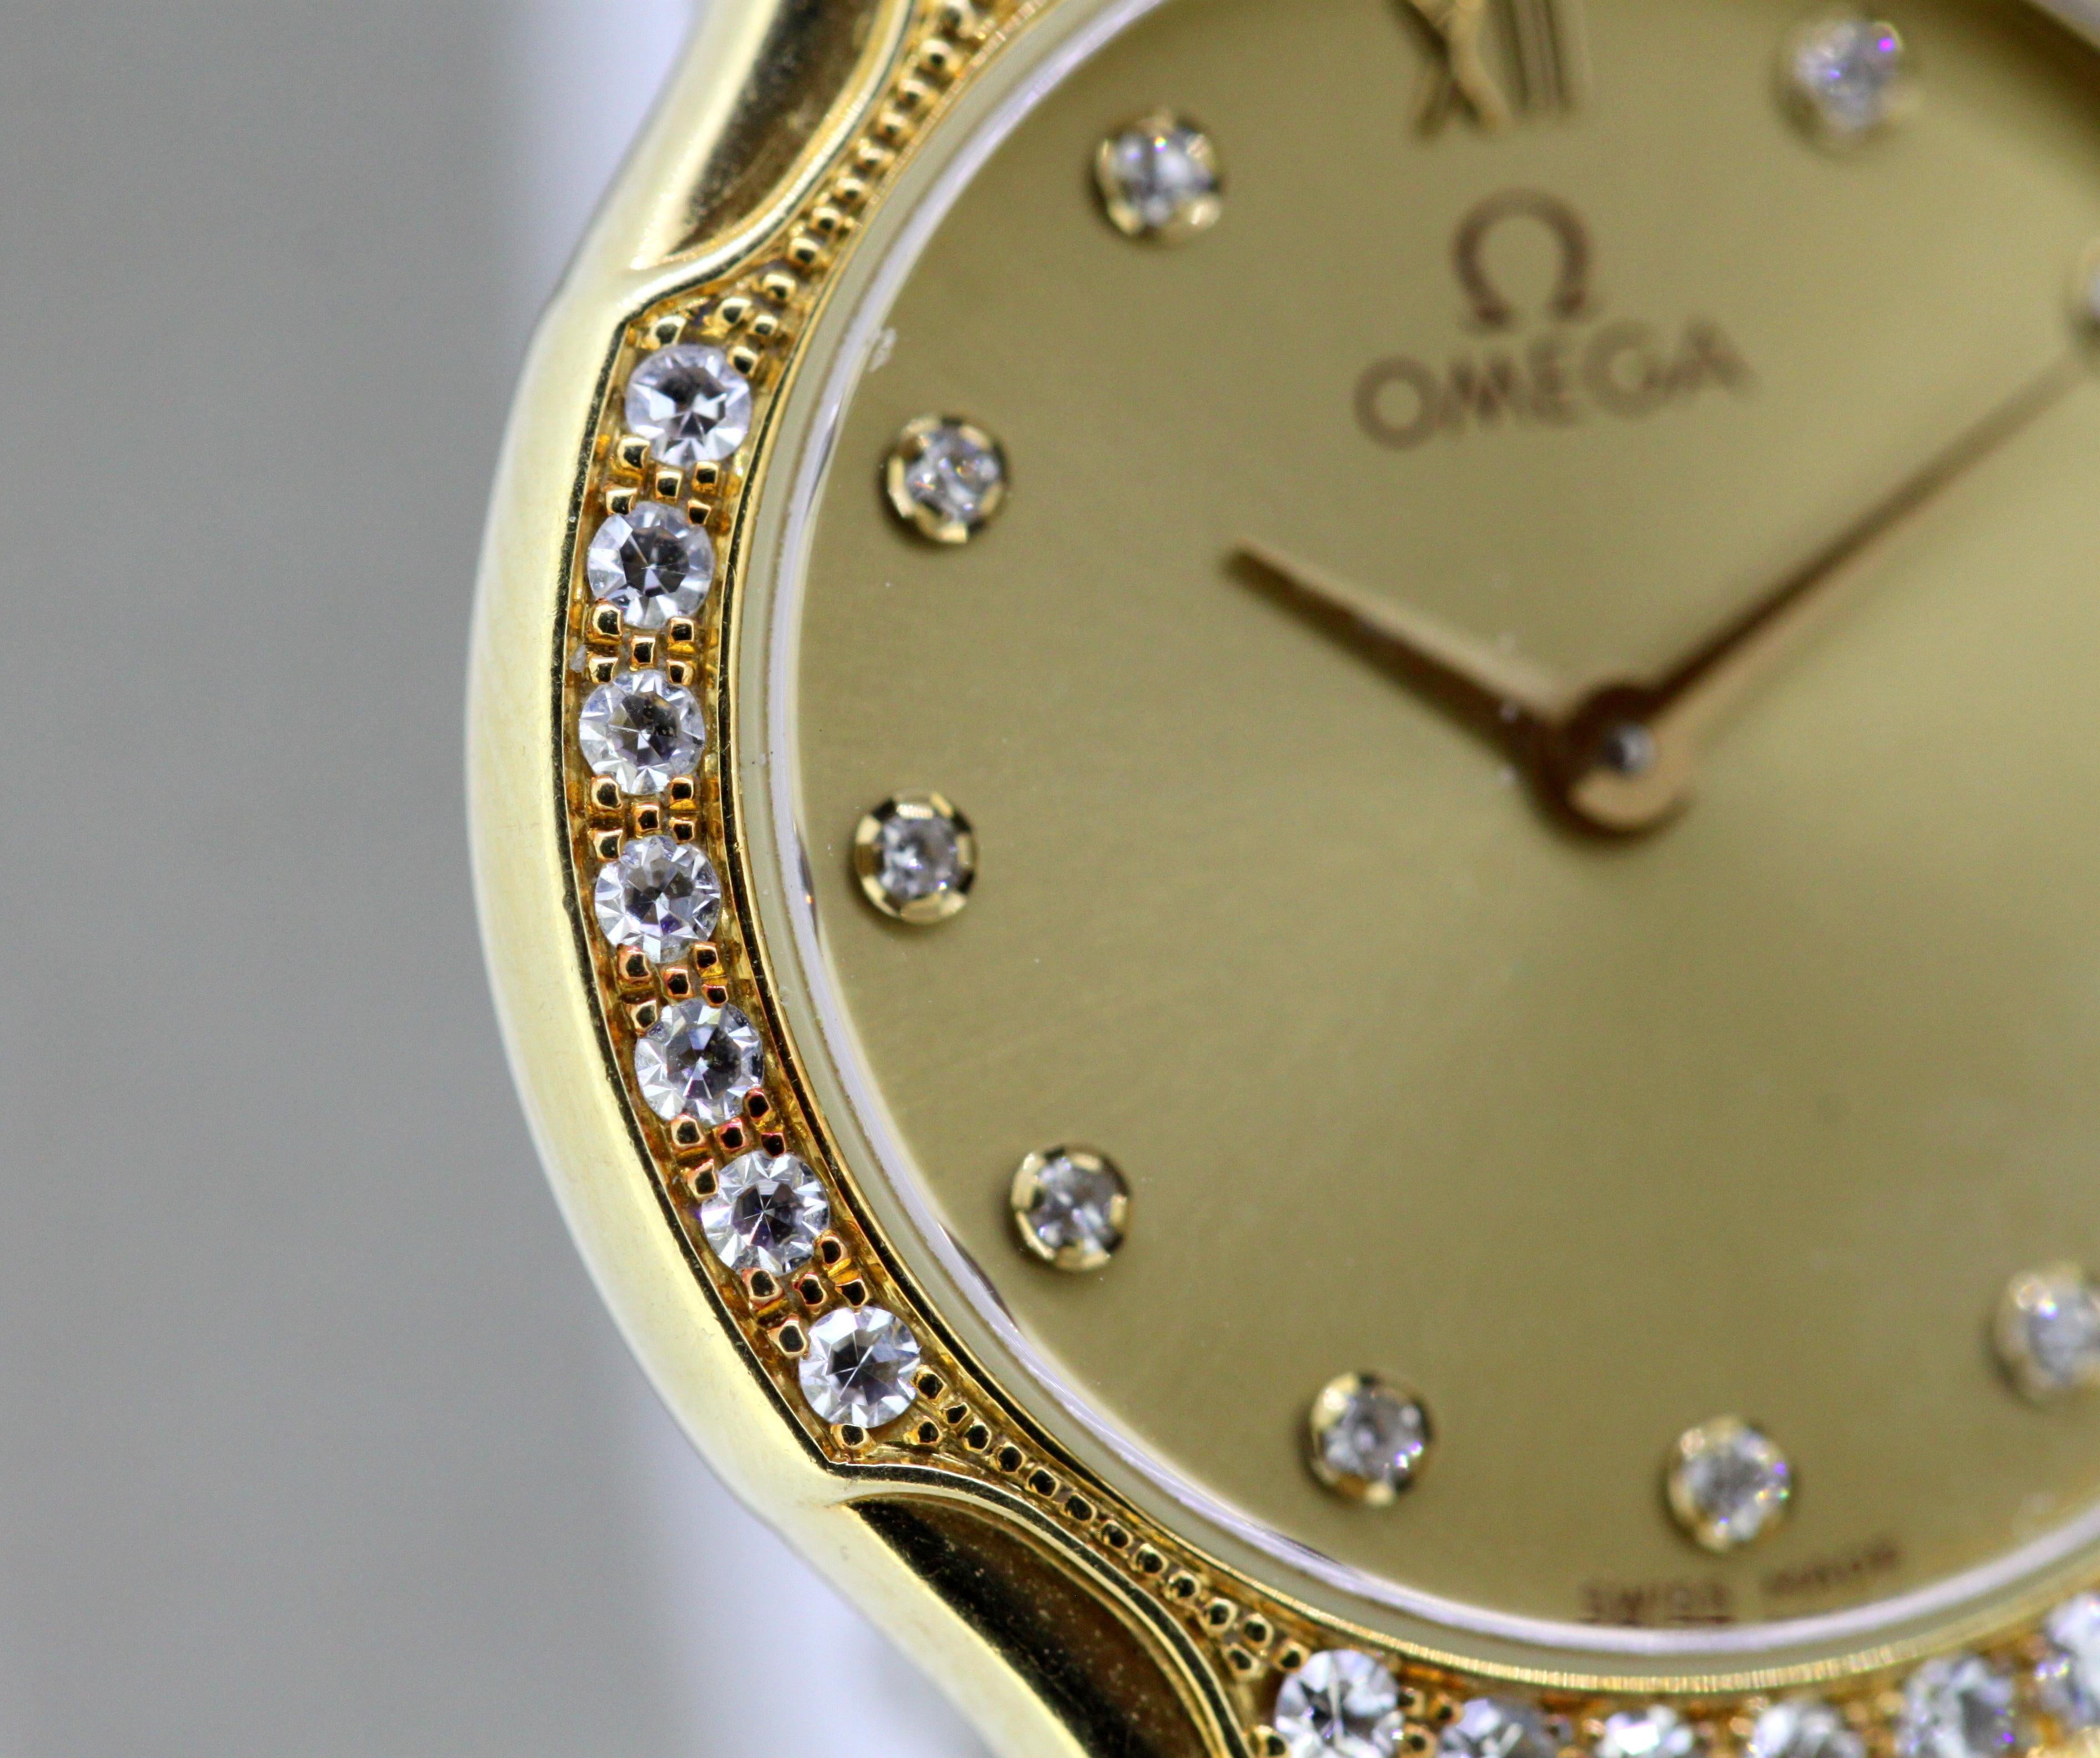 Ladies Omega wristwatch set in full 18k gold, diamond bezel & hour markers 2